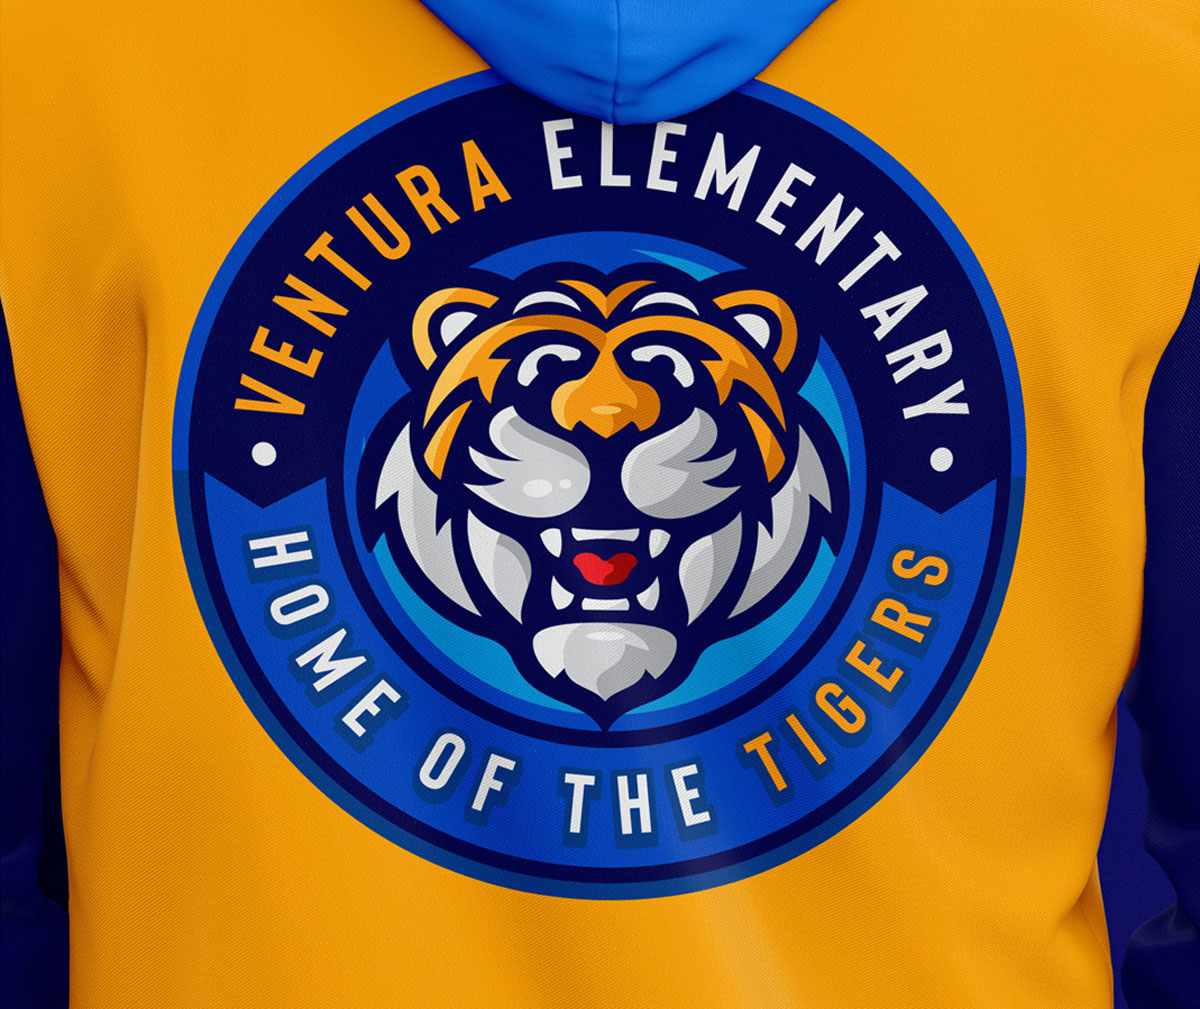 ventura elementary school logo mascot